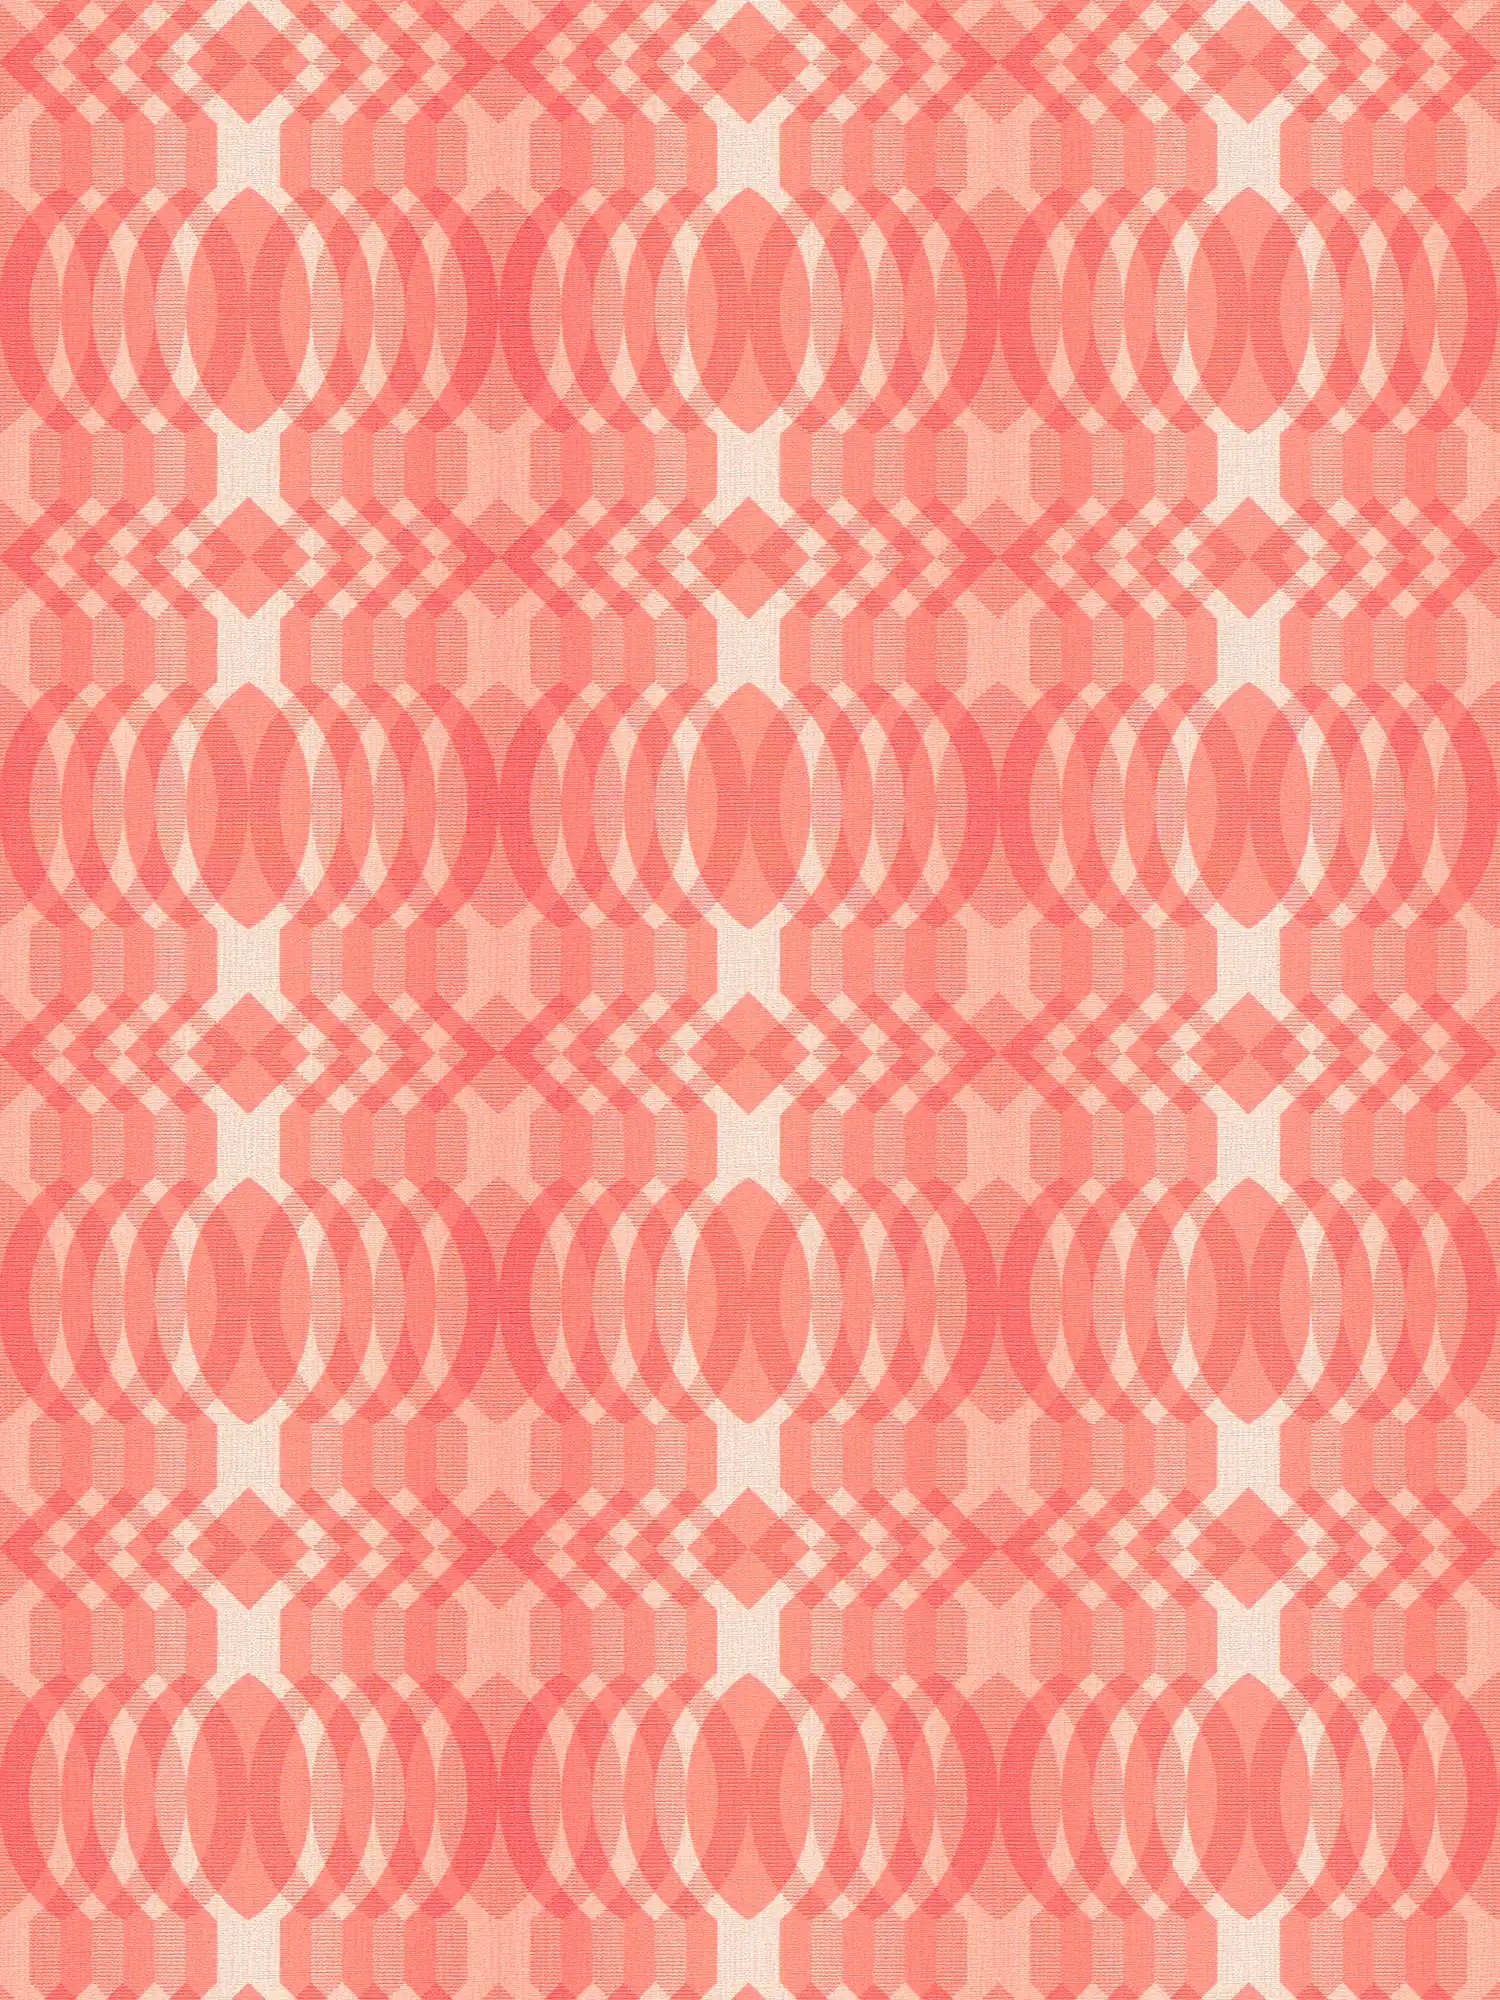 Geometrisch patroon op vliesbehang in retrostijl - rood, crème, wit
